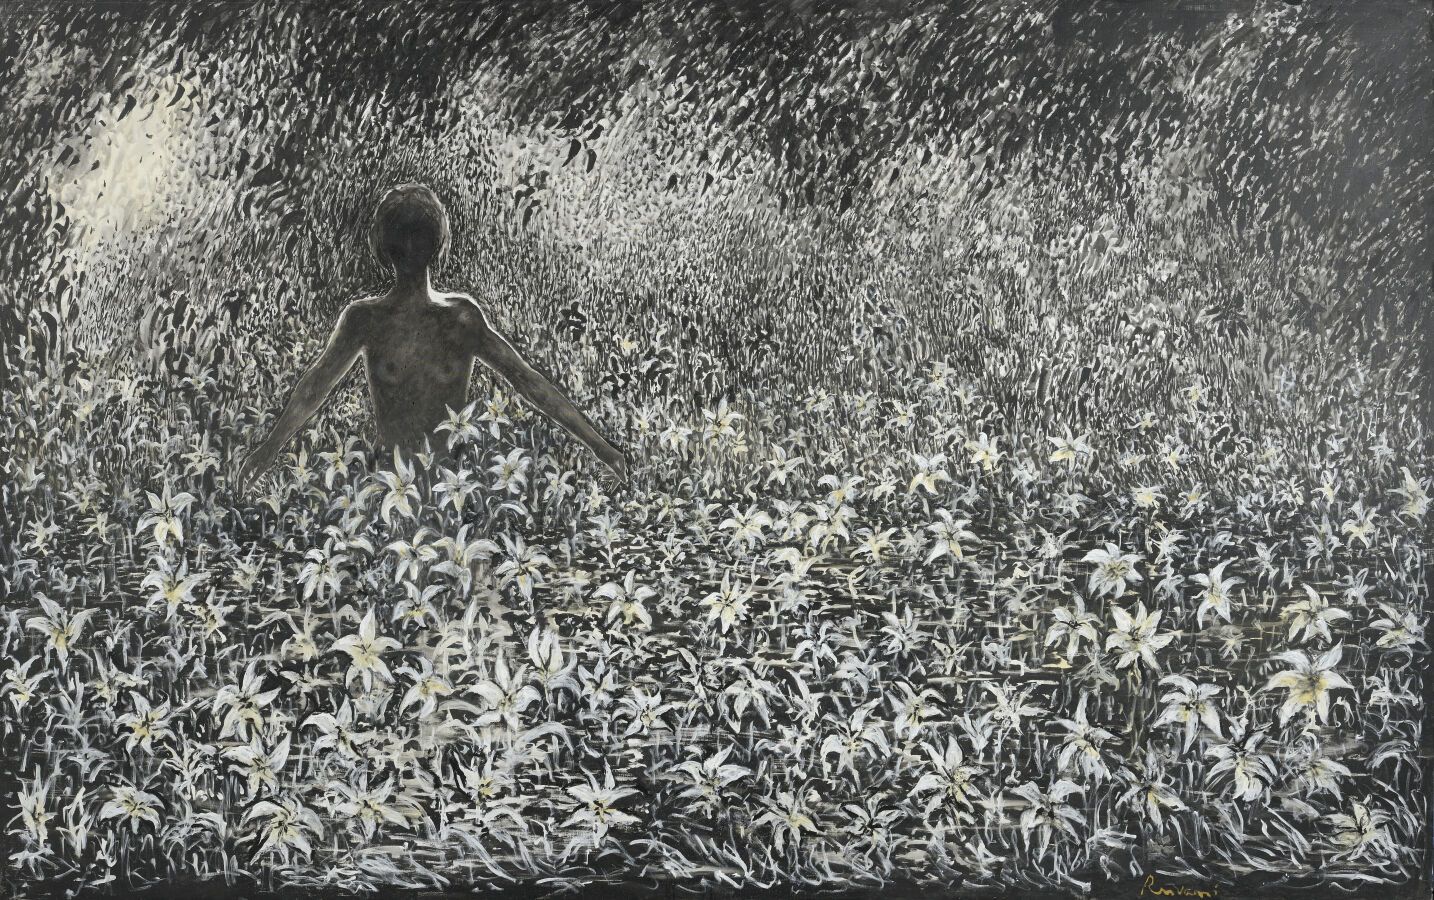 Null 谢尔盖-雷兹瓦尼（生于1928年

无题》，来自《储备》系列

布面油画，右下角有签名

H.190厘米 - 宽300厘米